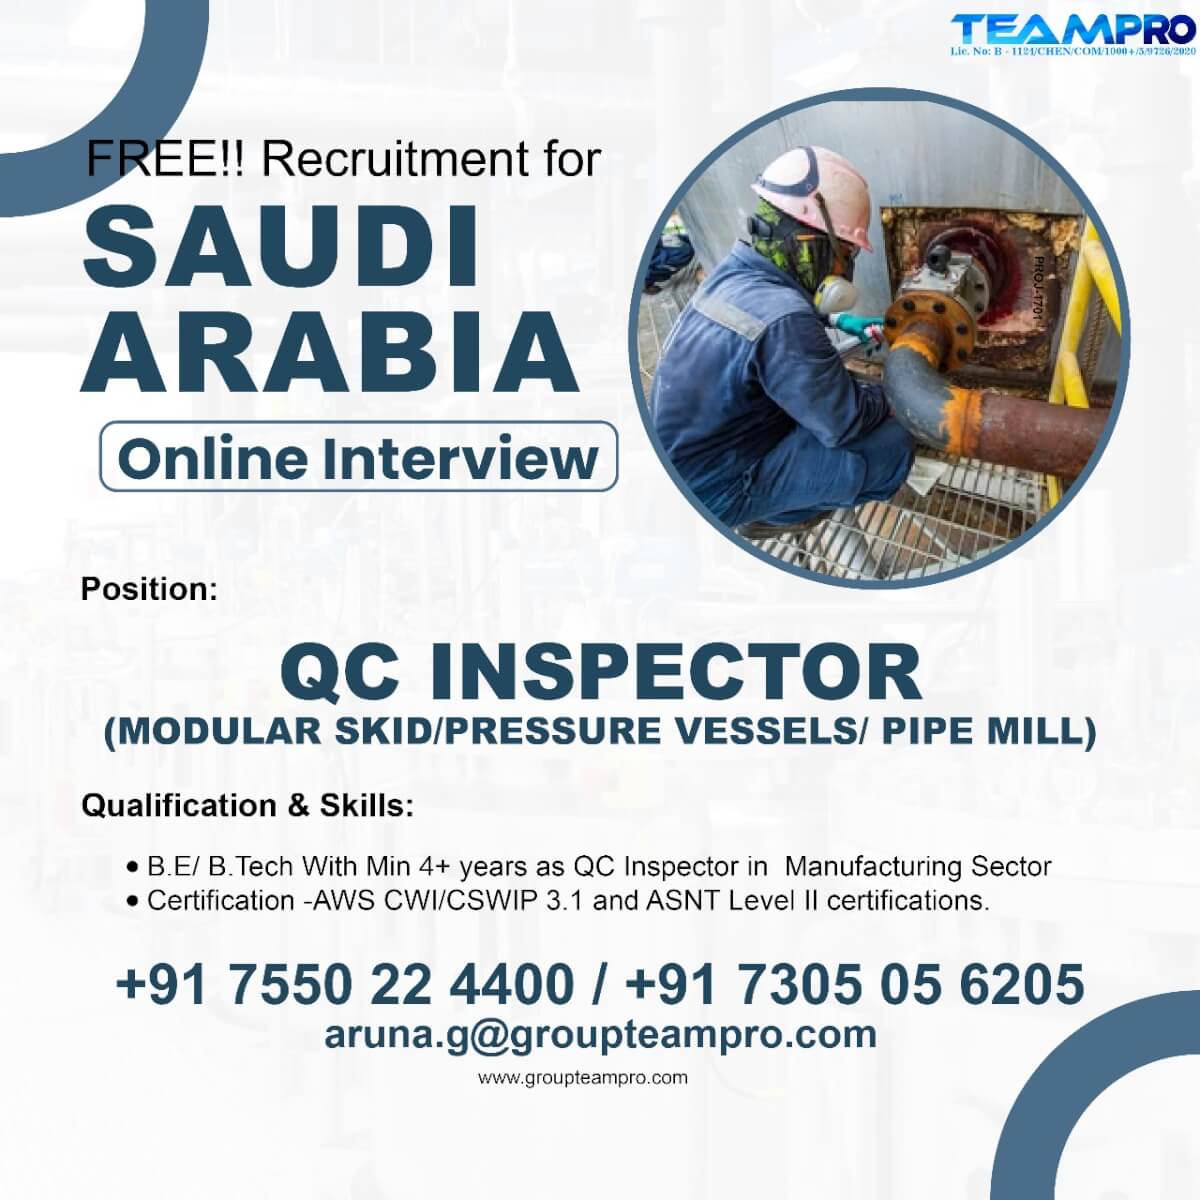 Free Recruitment For Saudi Arabia, Online Interview